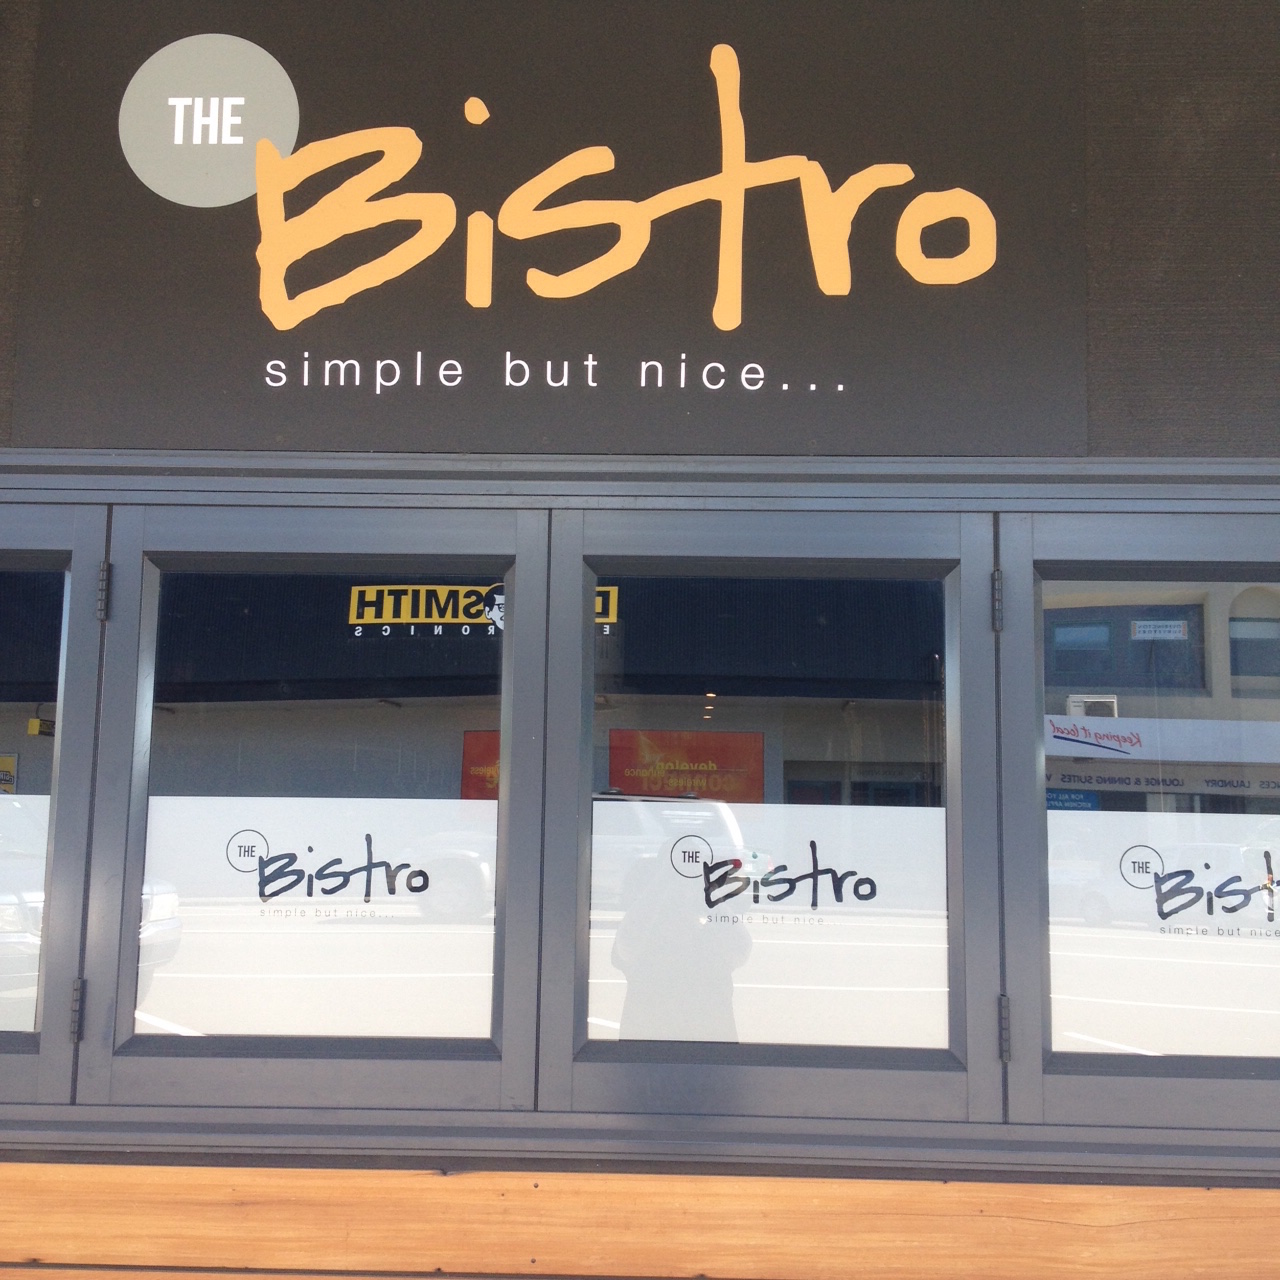 The Bistro in Taupo